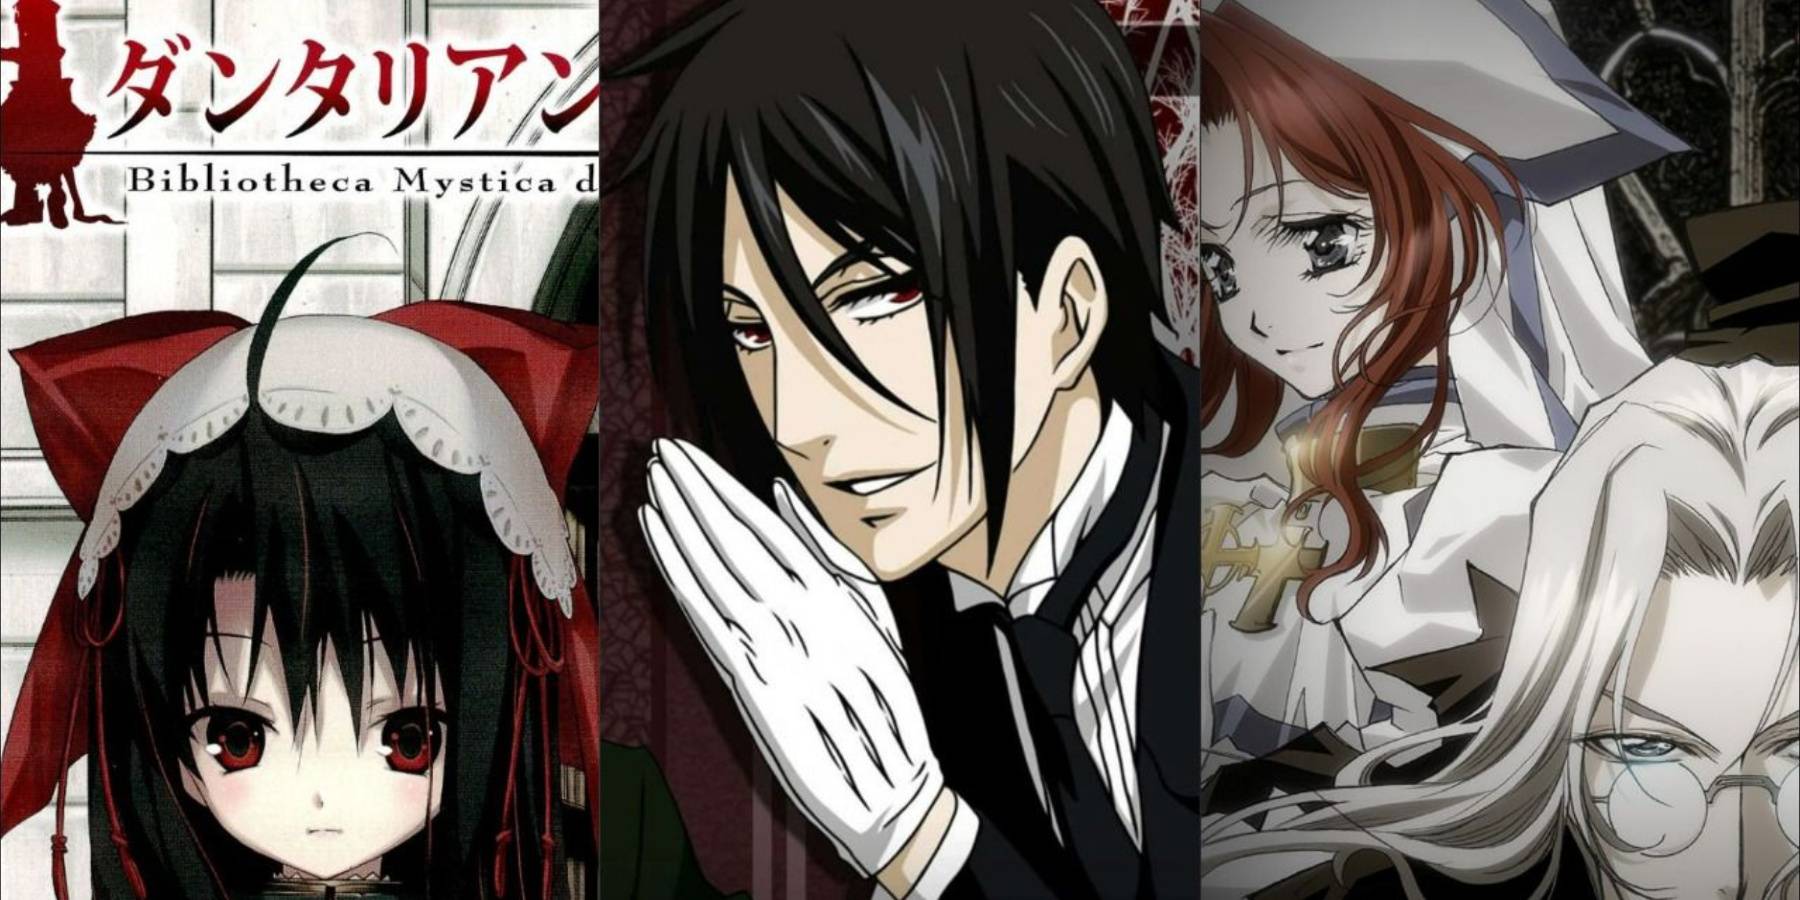 Gothic style anime